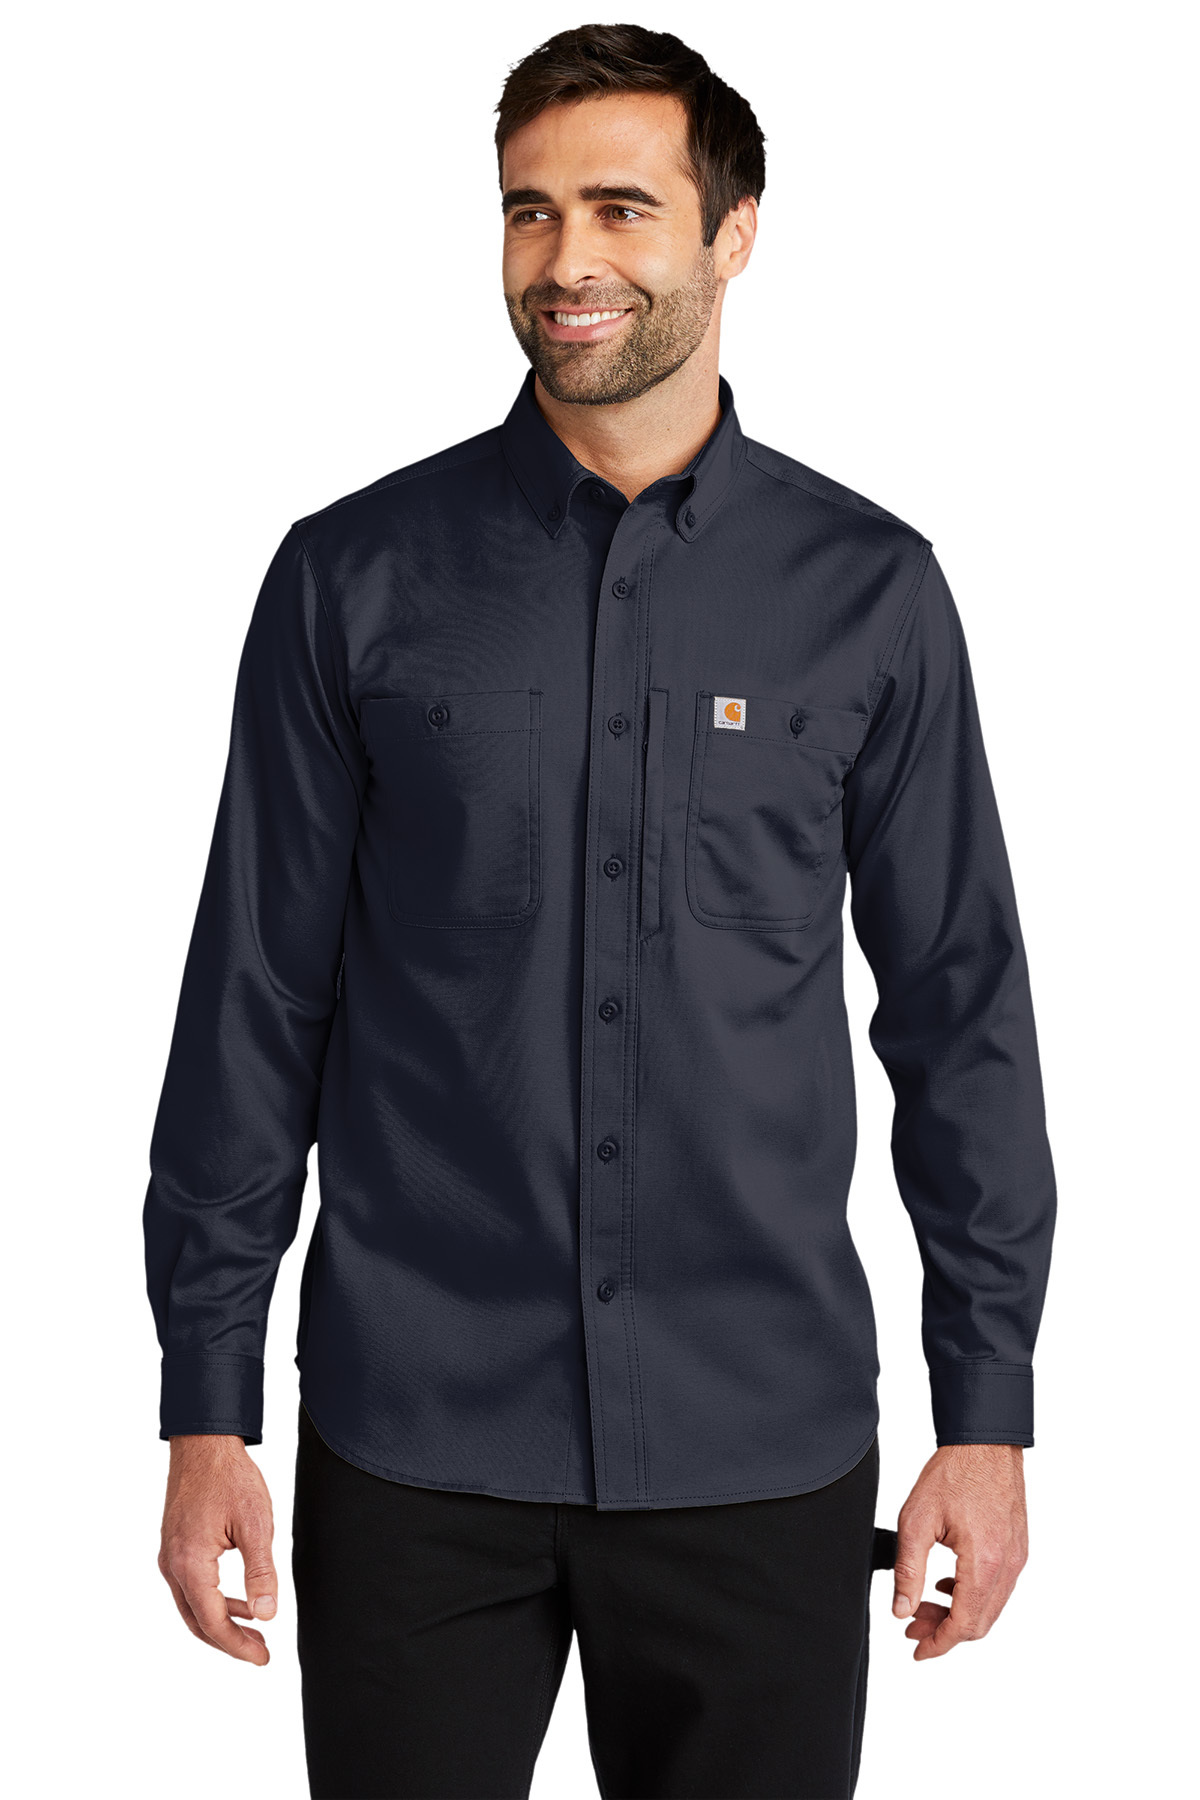 Carhartt Rugged SanMar Sleeve | Long | Shirt Product Series Professional